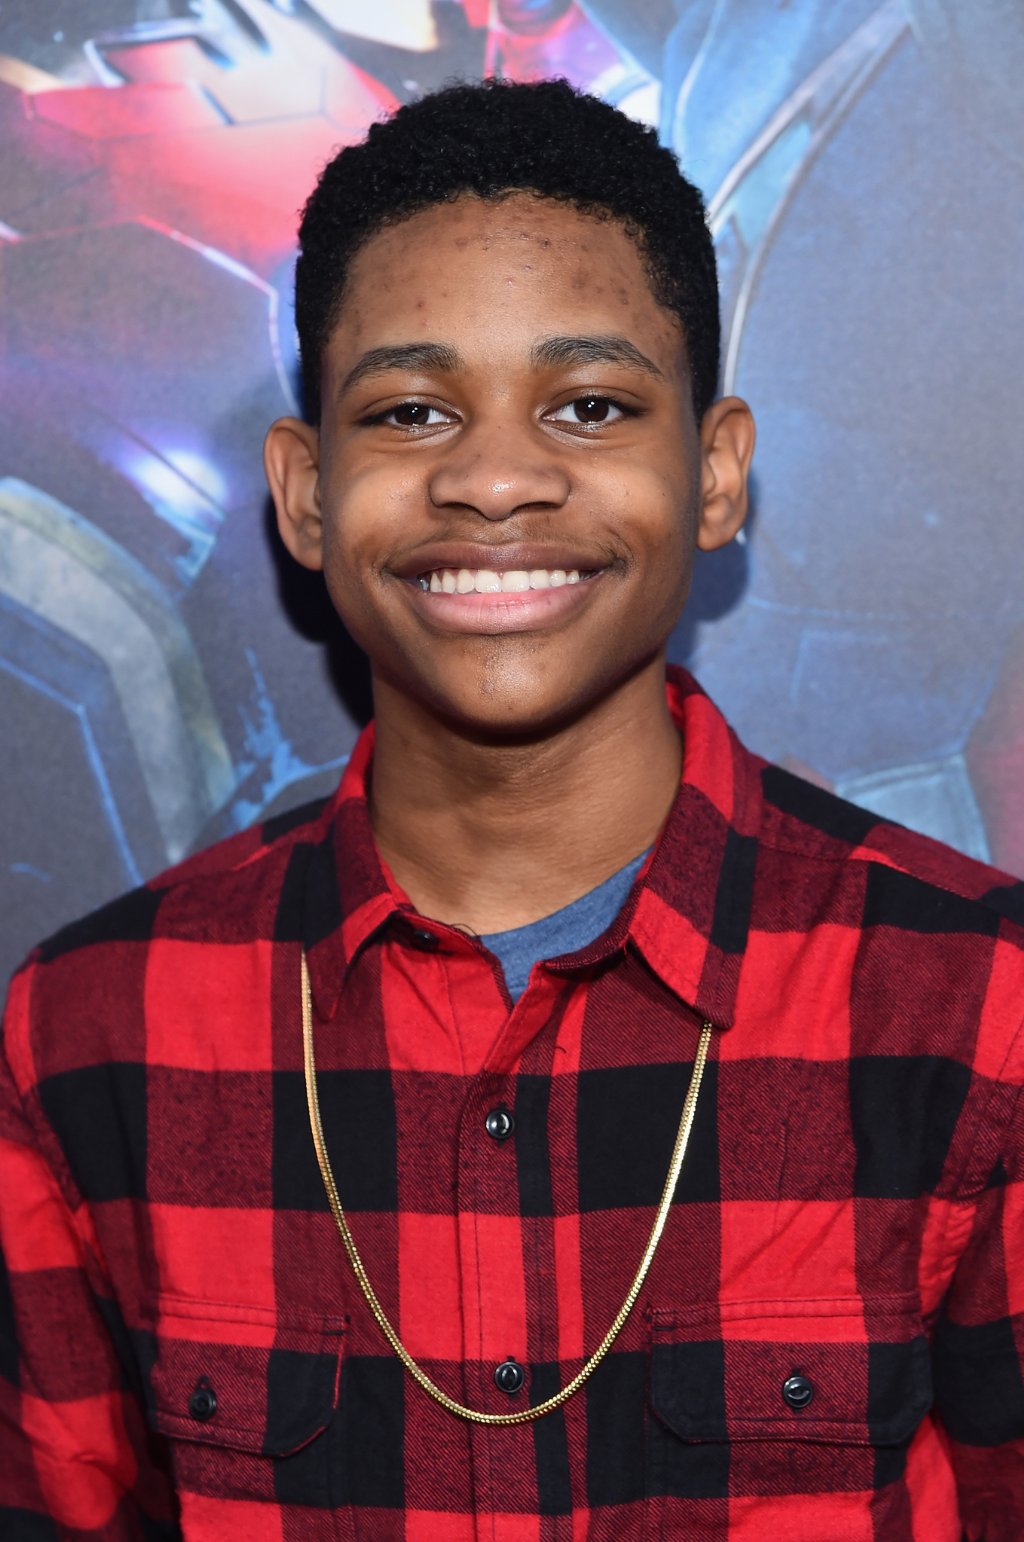 Tyrel Jackson Williams (born March 16, 1997) is an American&nb...